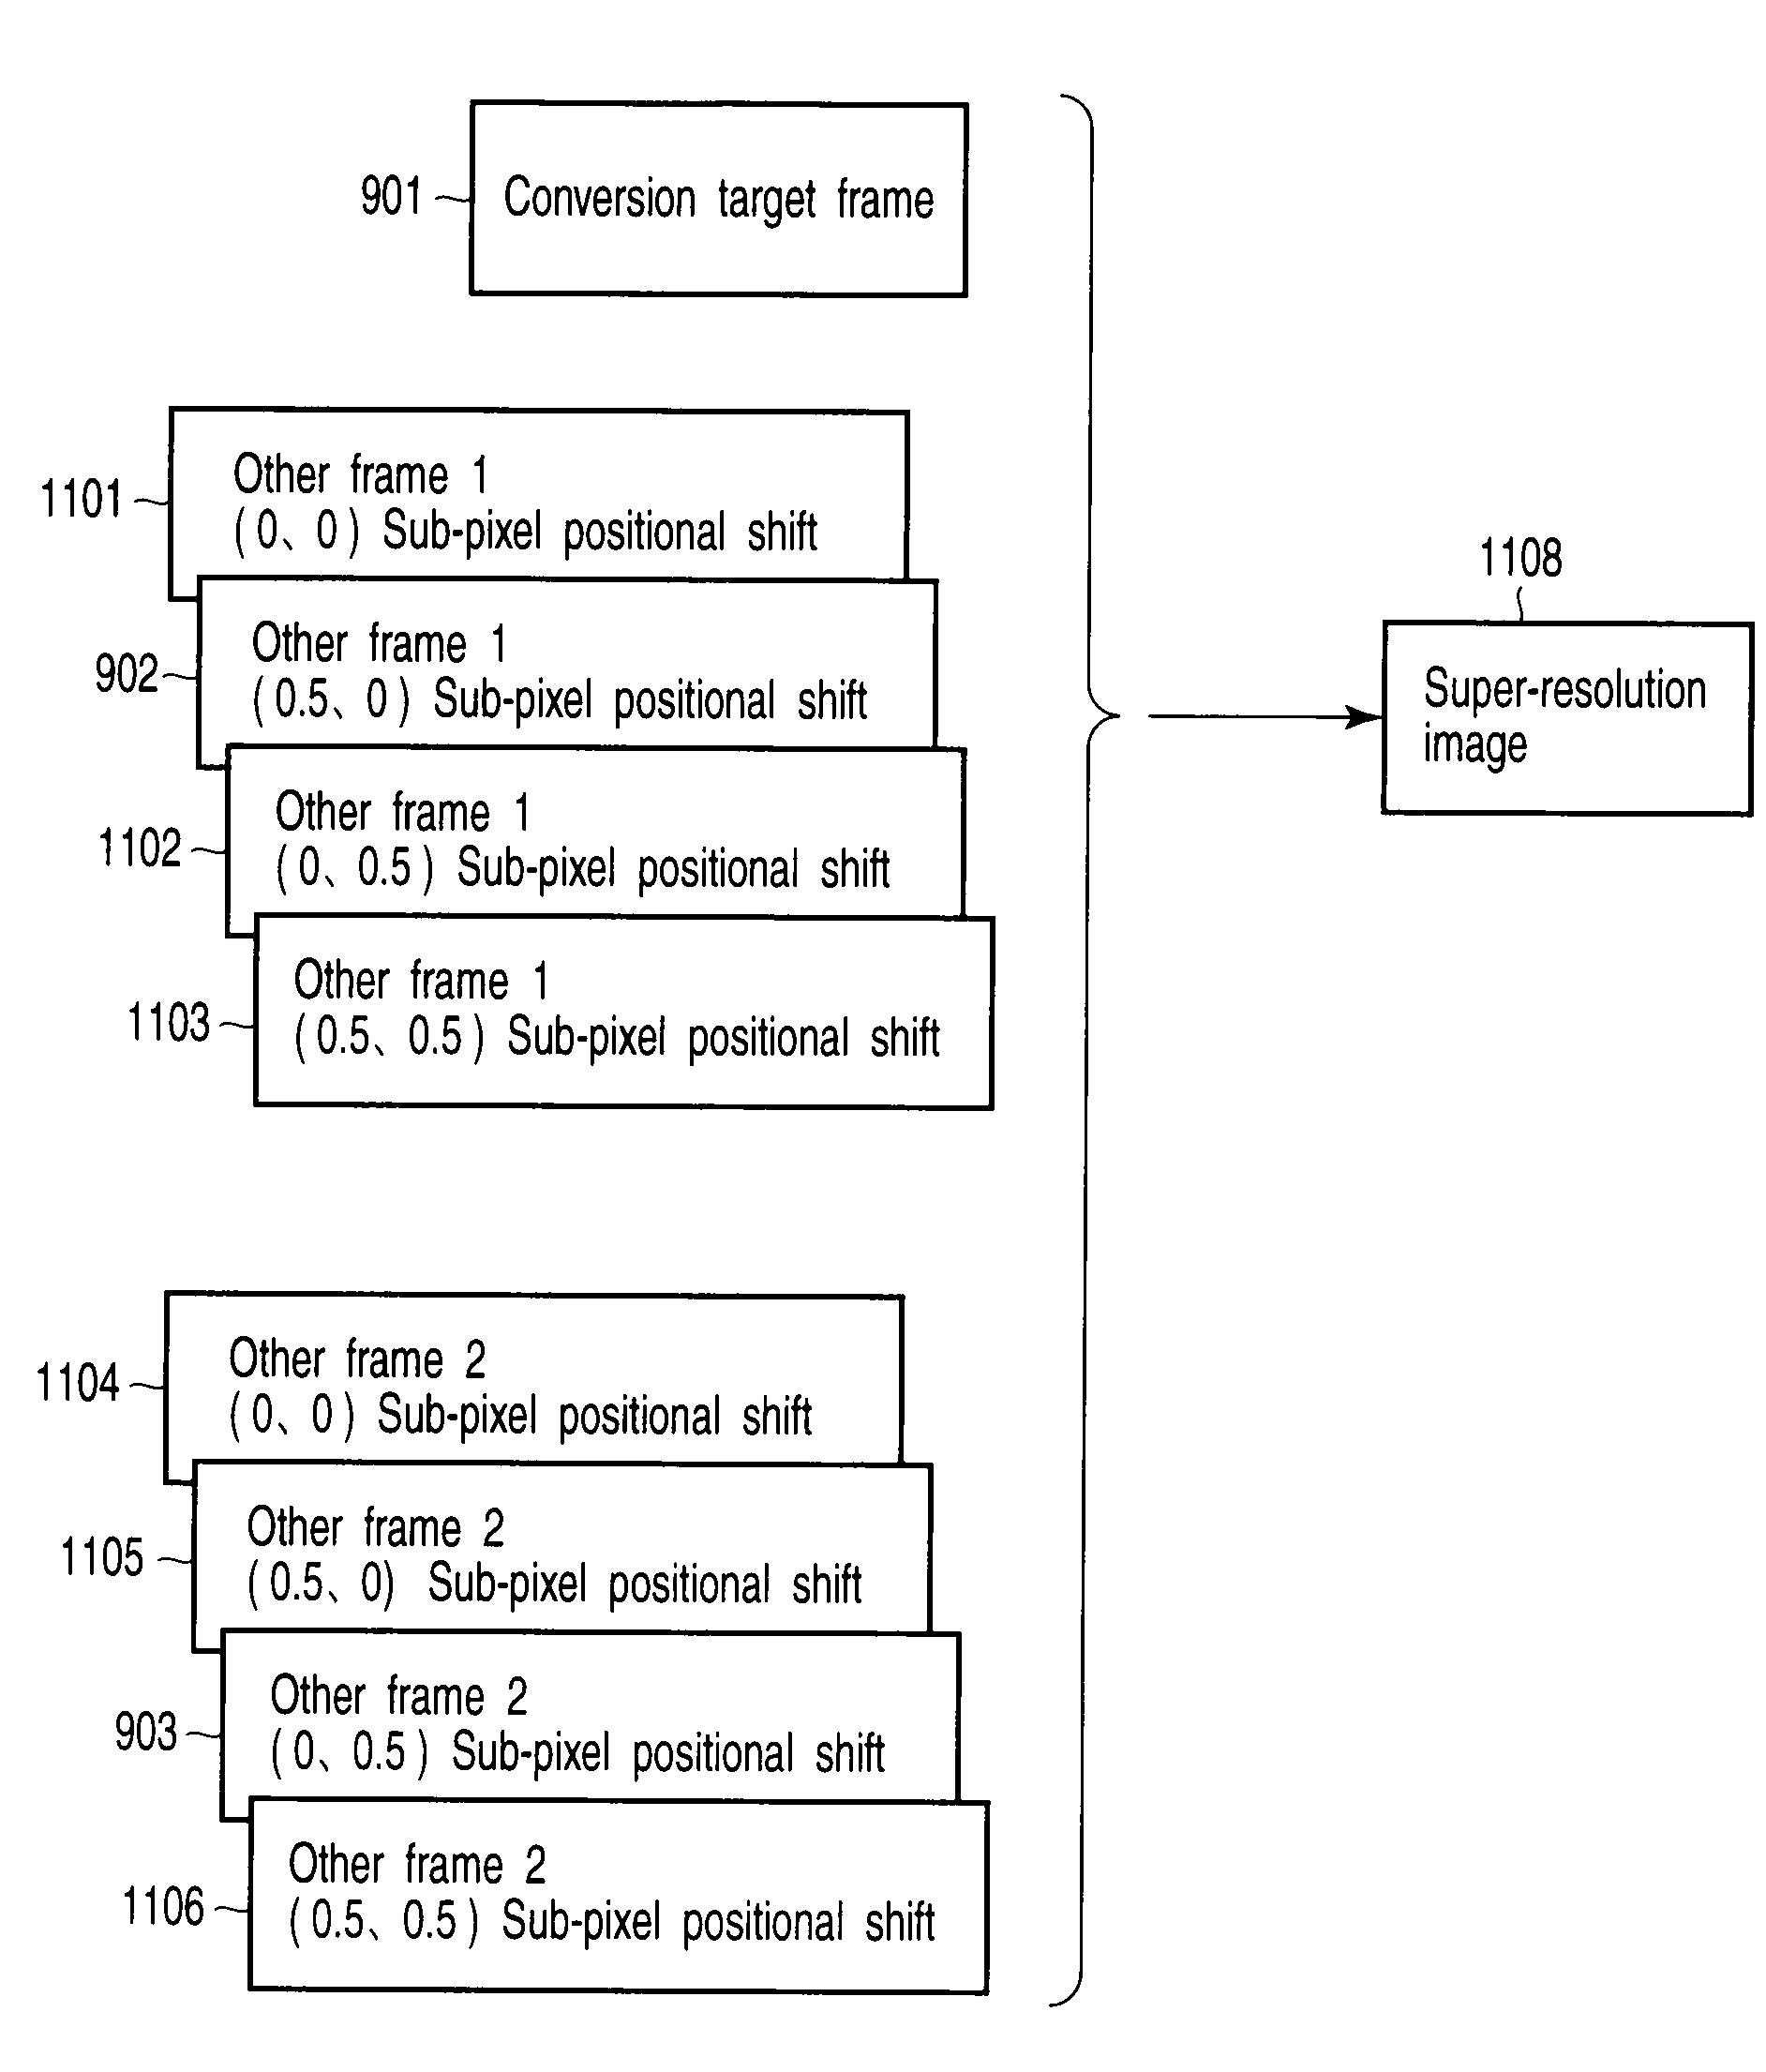 Image processing apparatus, method, and program